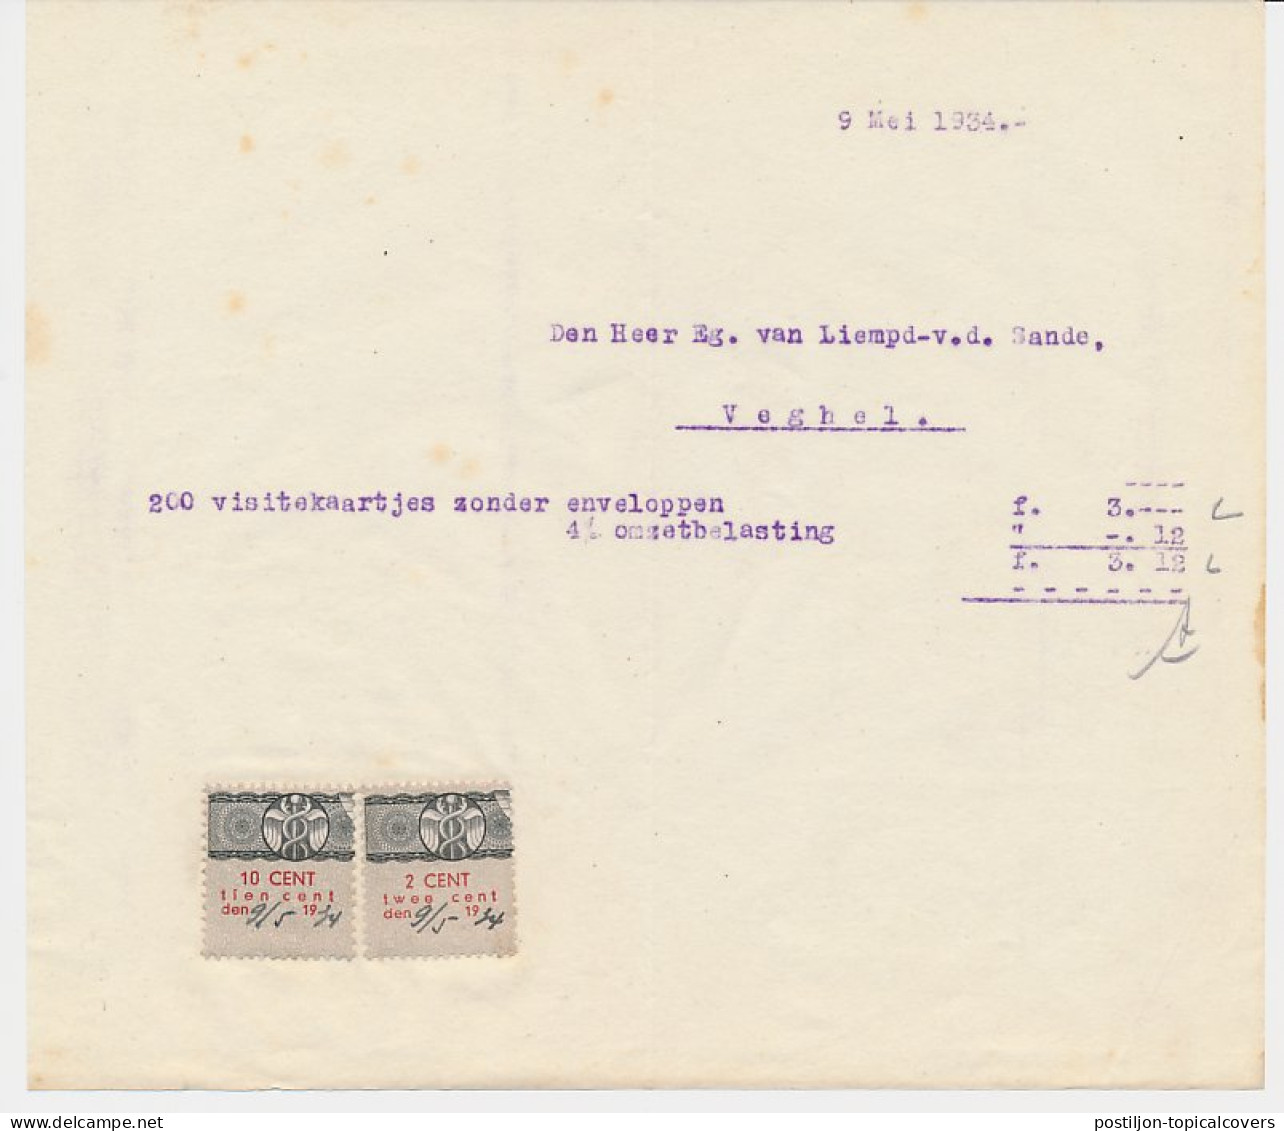 Omzetbelasting 2 / 10 CENT - Veghel 1934 - Fiscaux